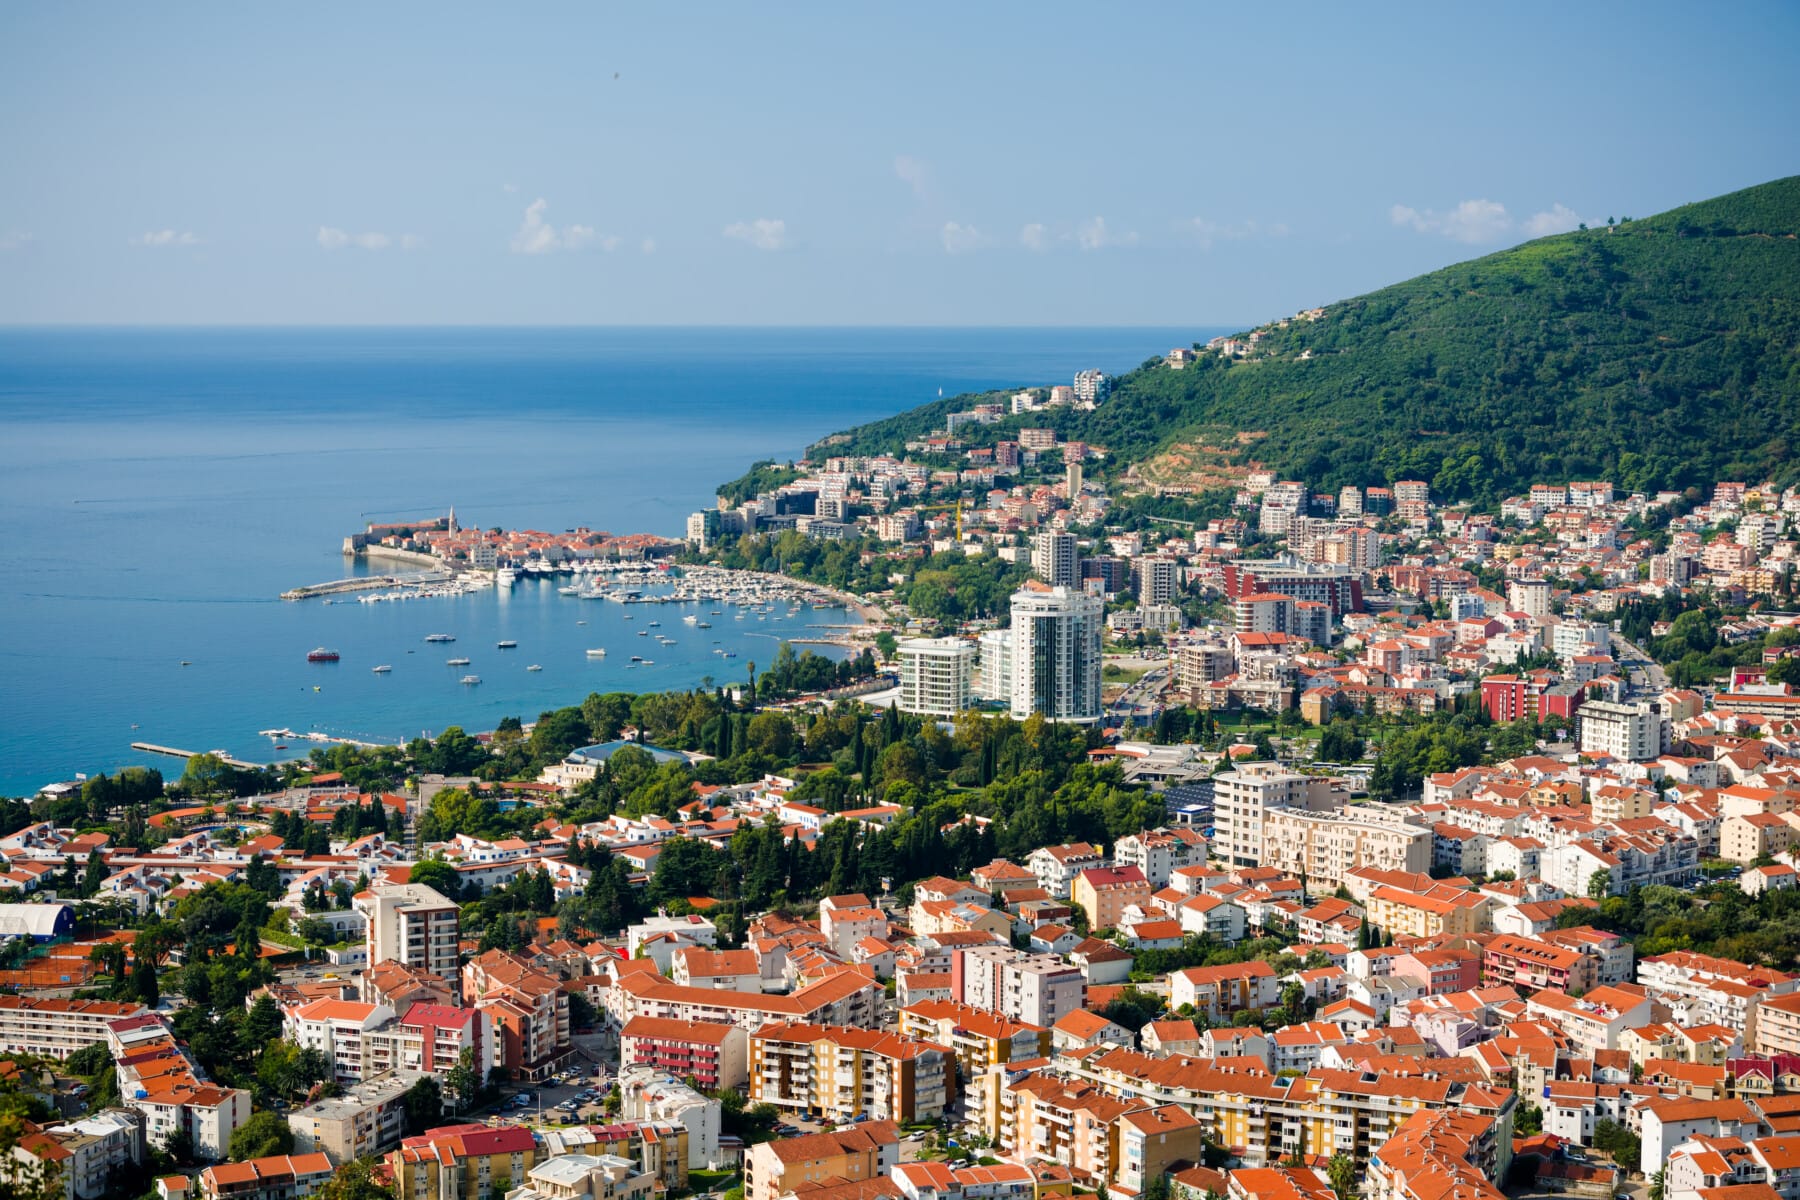 Top view of the seacoast of Budva, Montenegro.